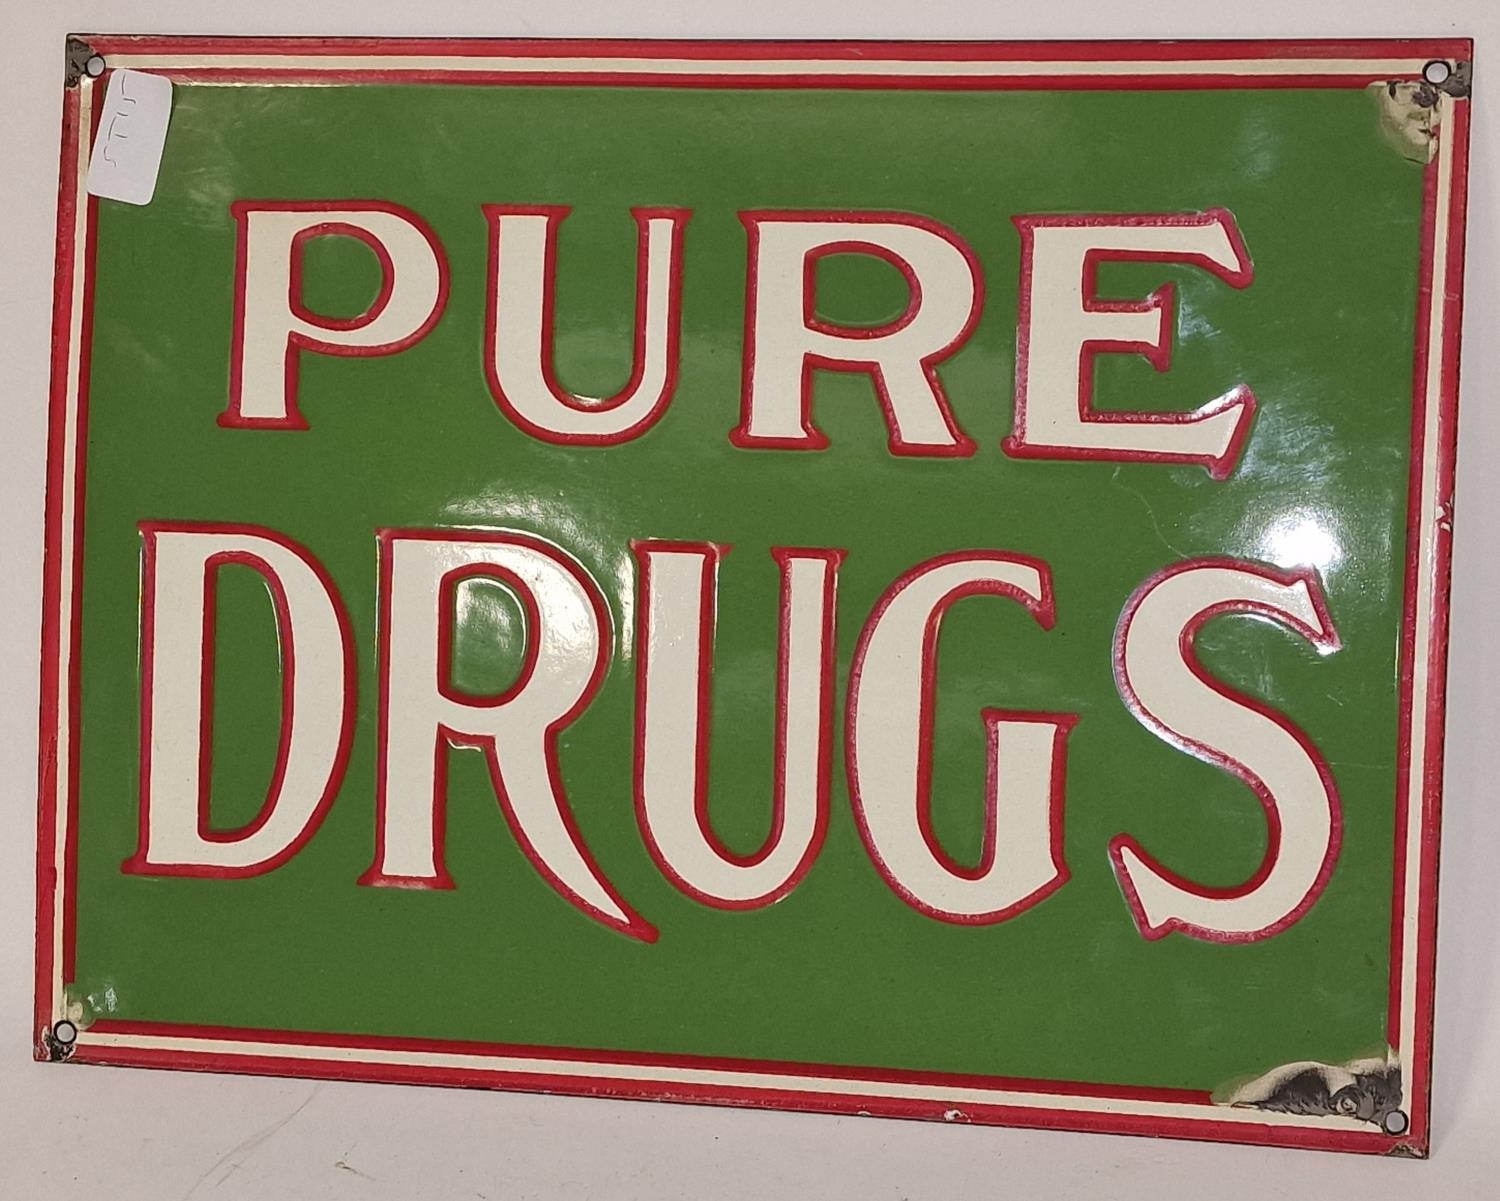 Pure drugs vitreous enamel Advertising sign 40x30cm